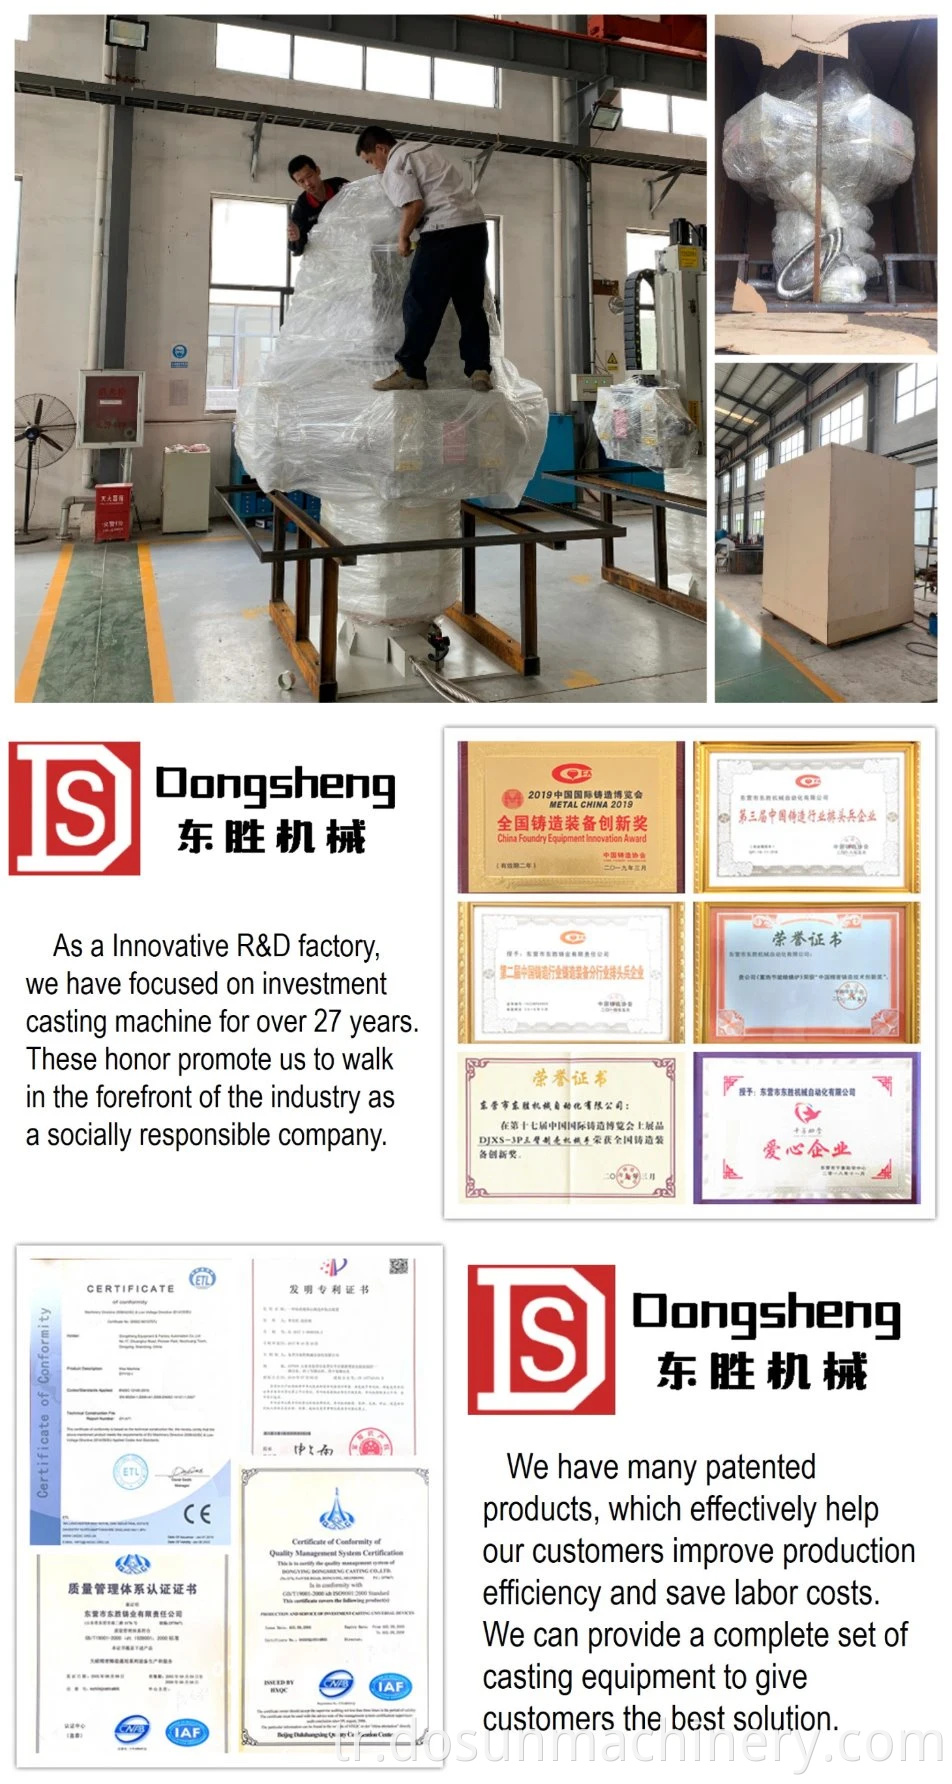 Dongsheng Shell Yapımı Manipülatör Oto Parçaları Üretimi